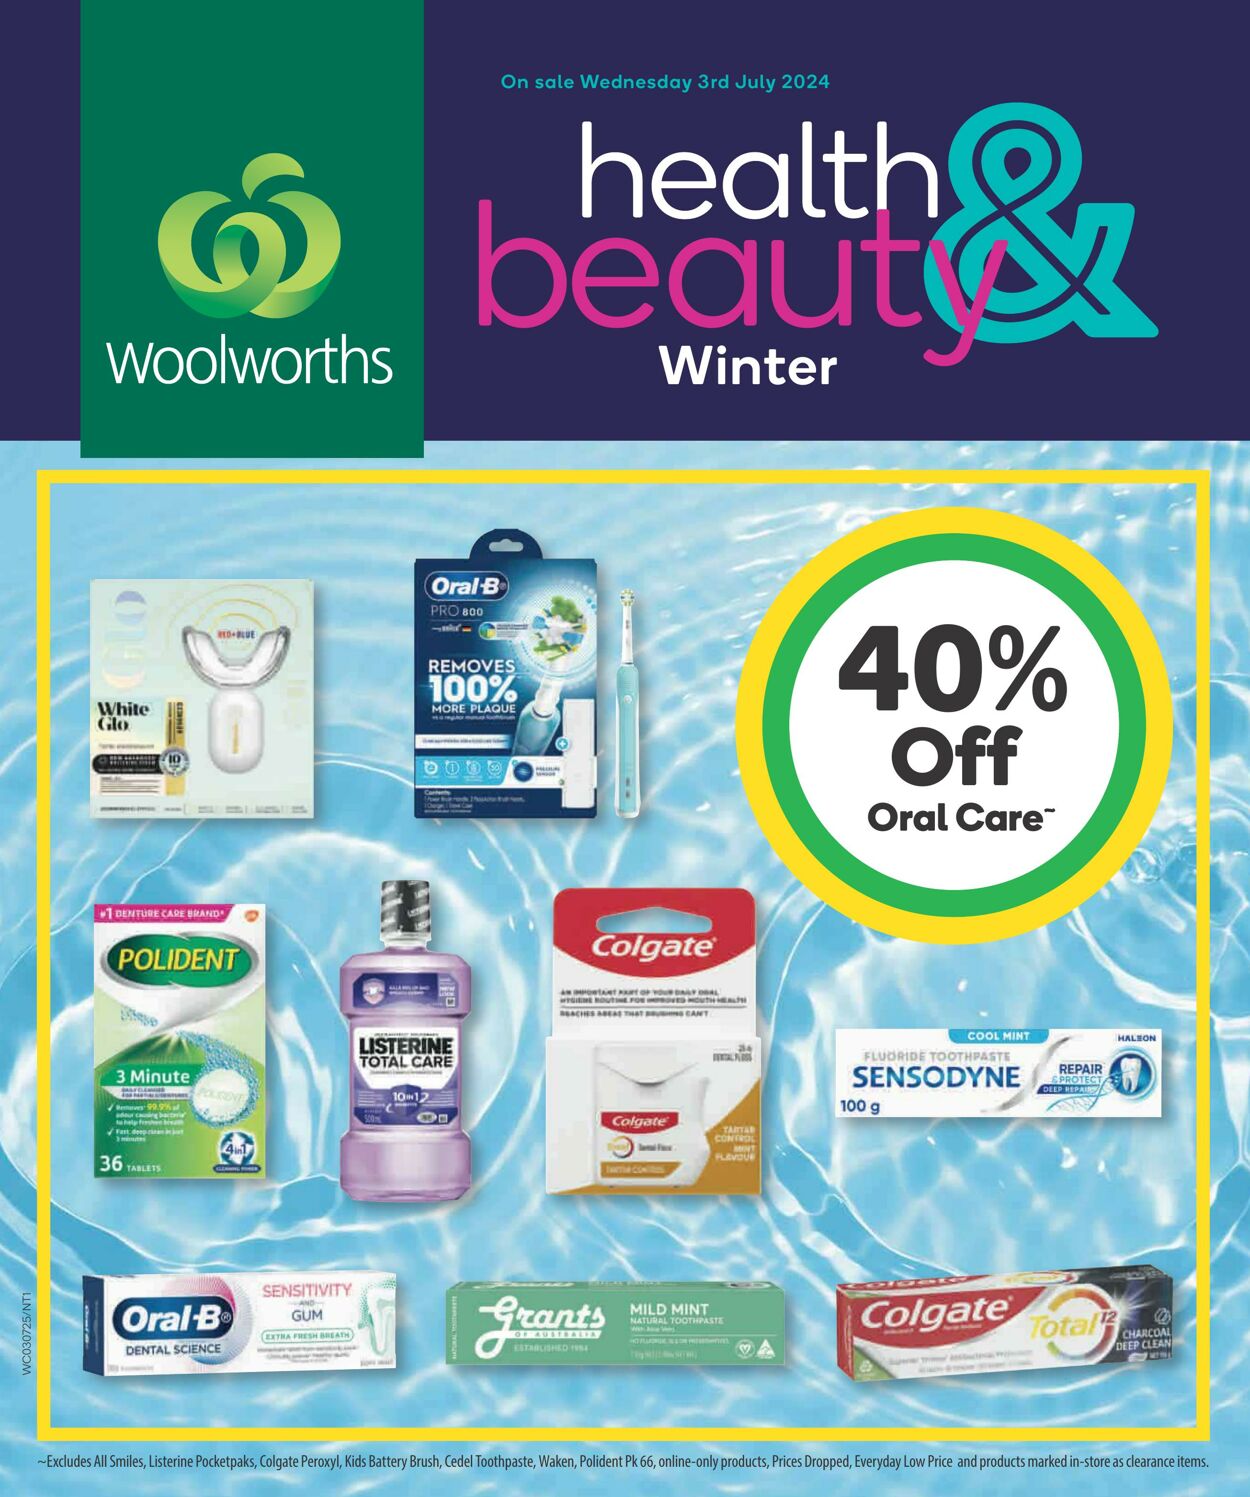 Catalogue Woolworths - Winter Health & Beauty Catalogue NT 3 Jul, 2024 - 9 Jul, 2024